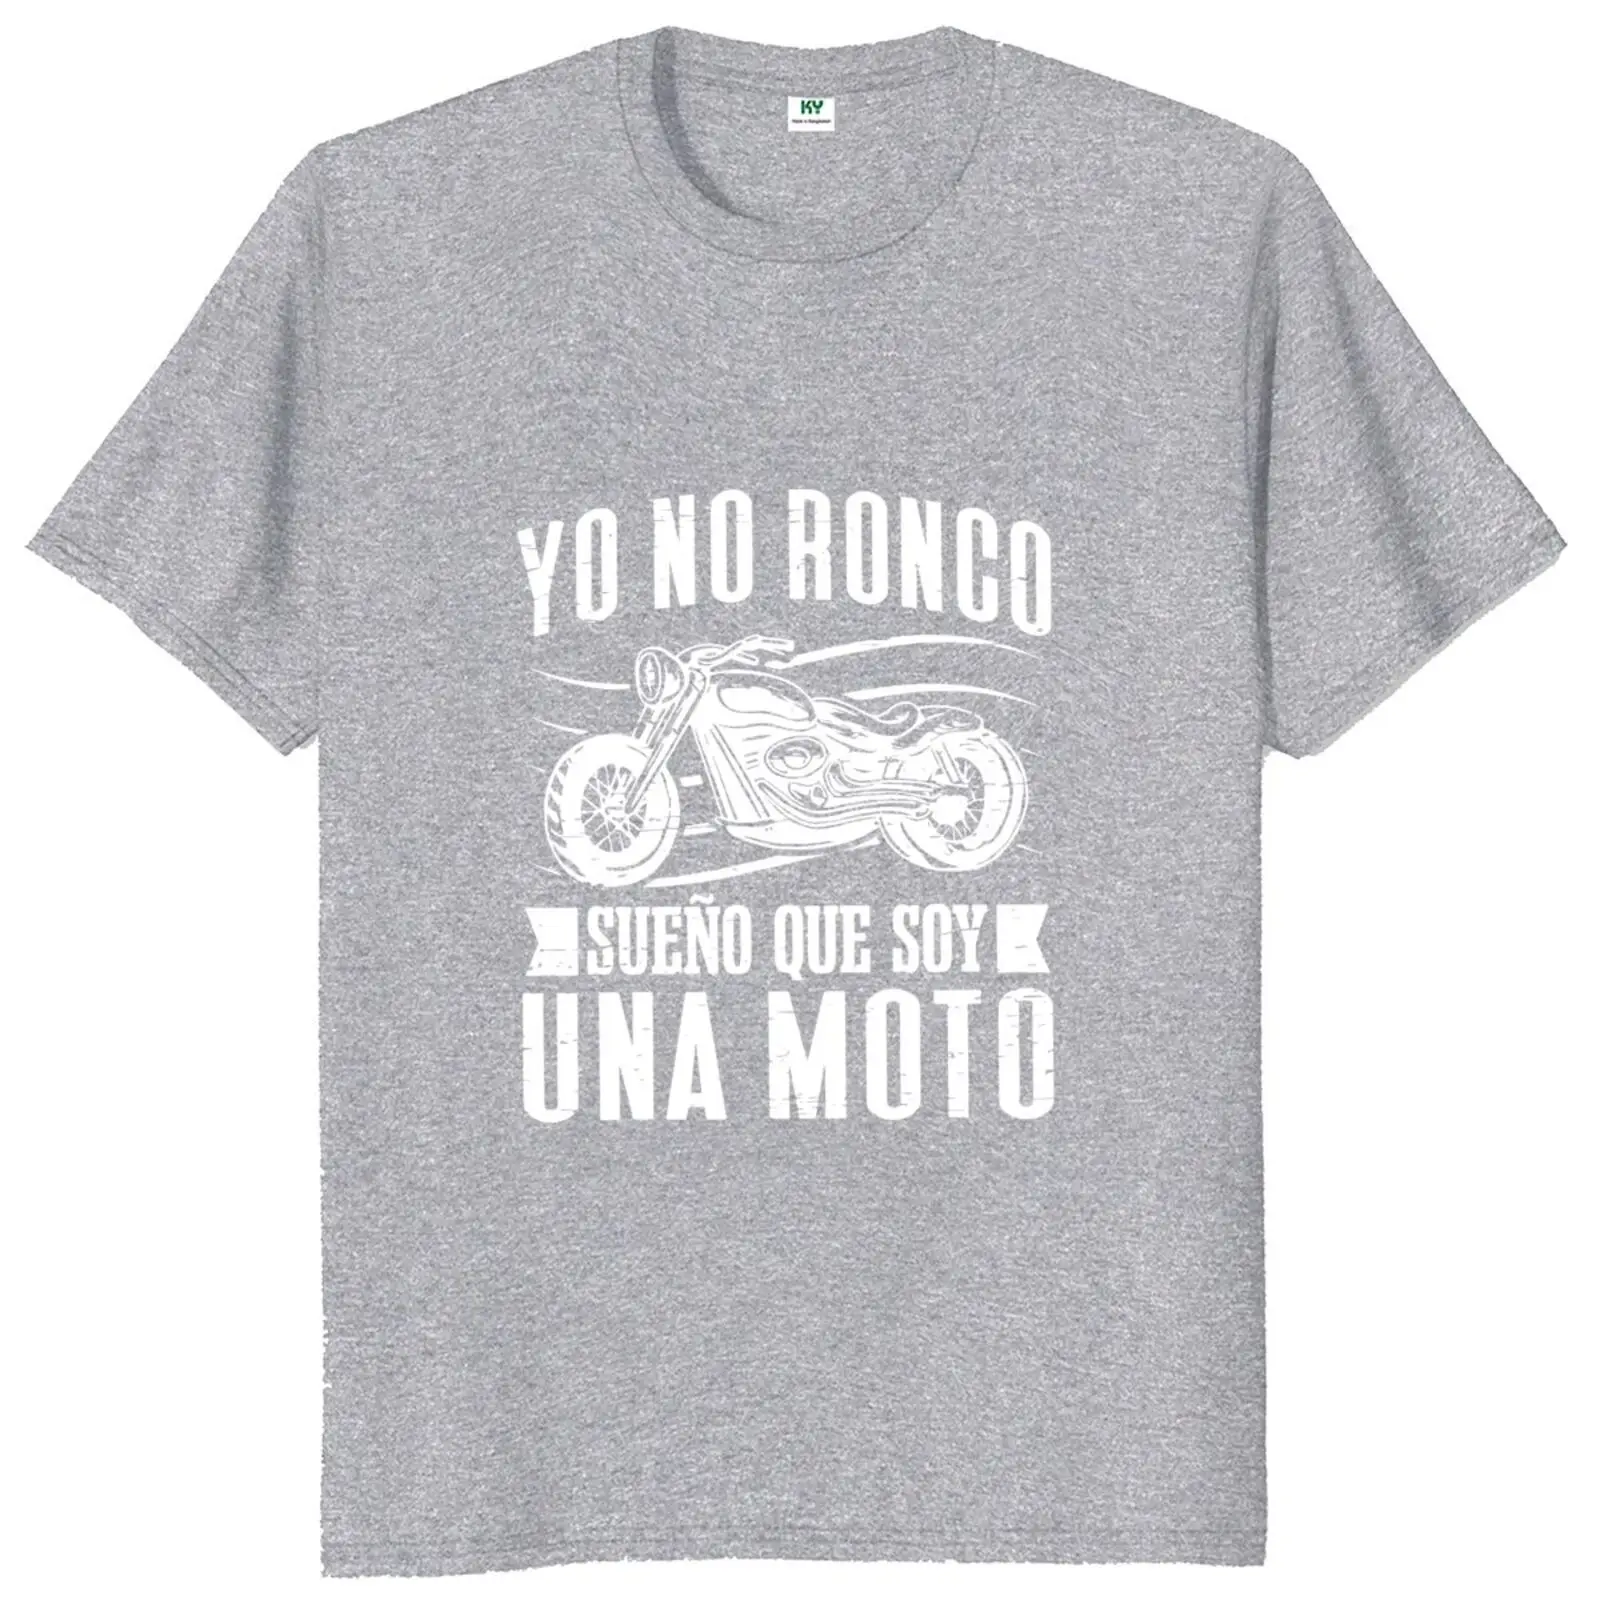 T-shirt Man I Can Not I Have Motorcycle, Gift Man Biker, T-shirt Humor,  Christmas Gift Man -  Finland